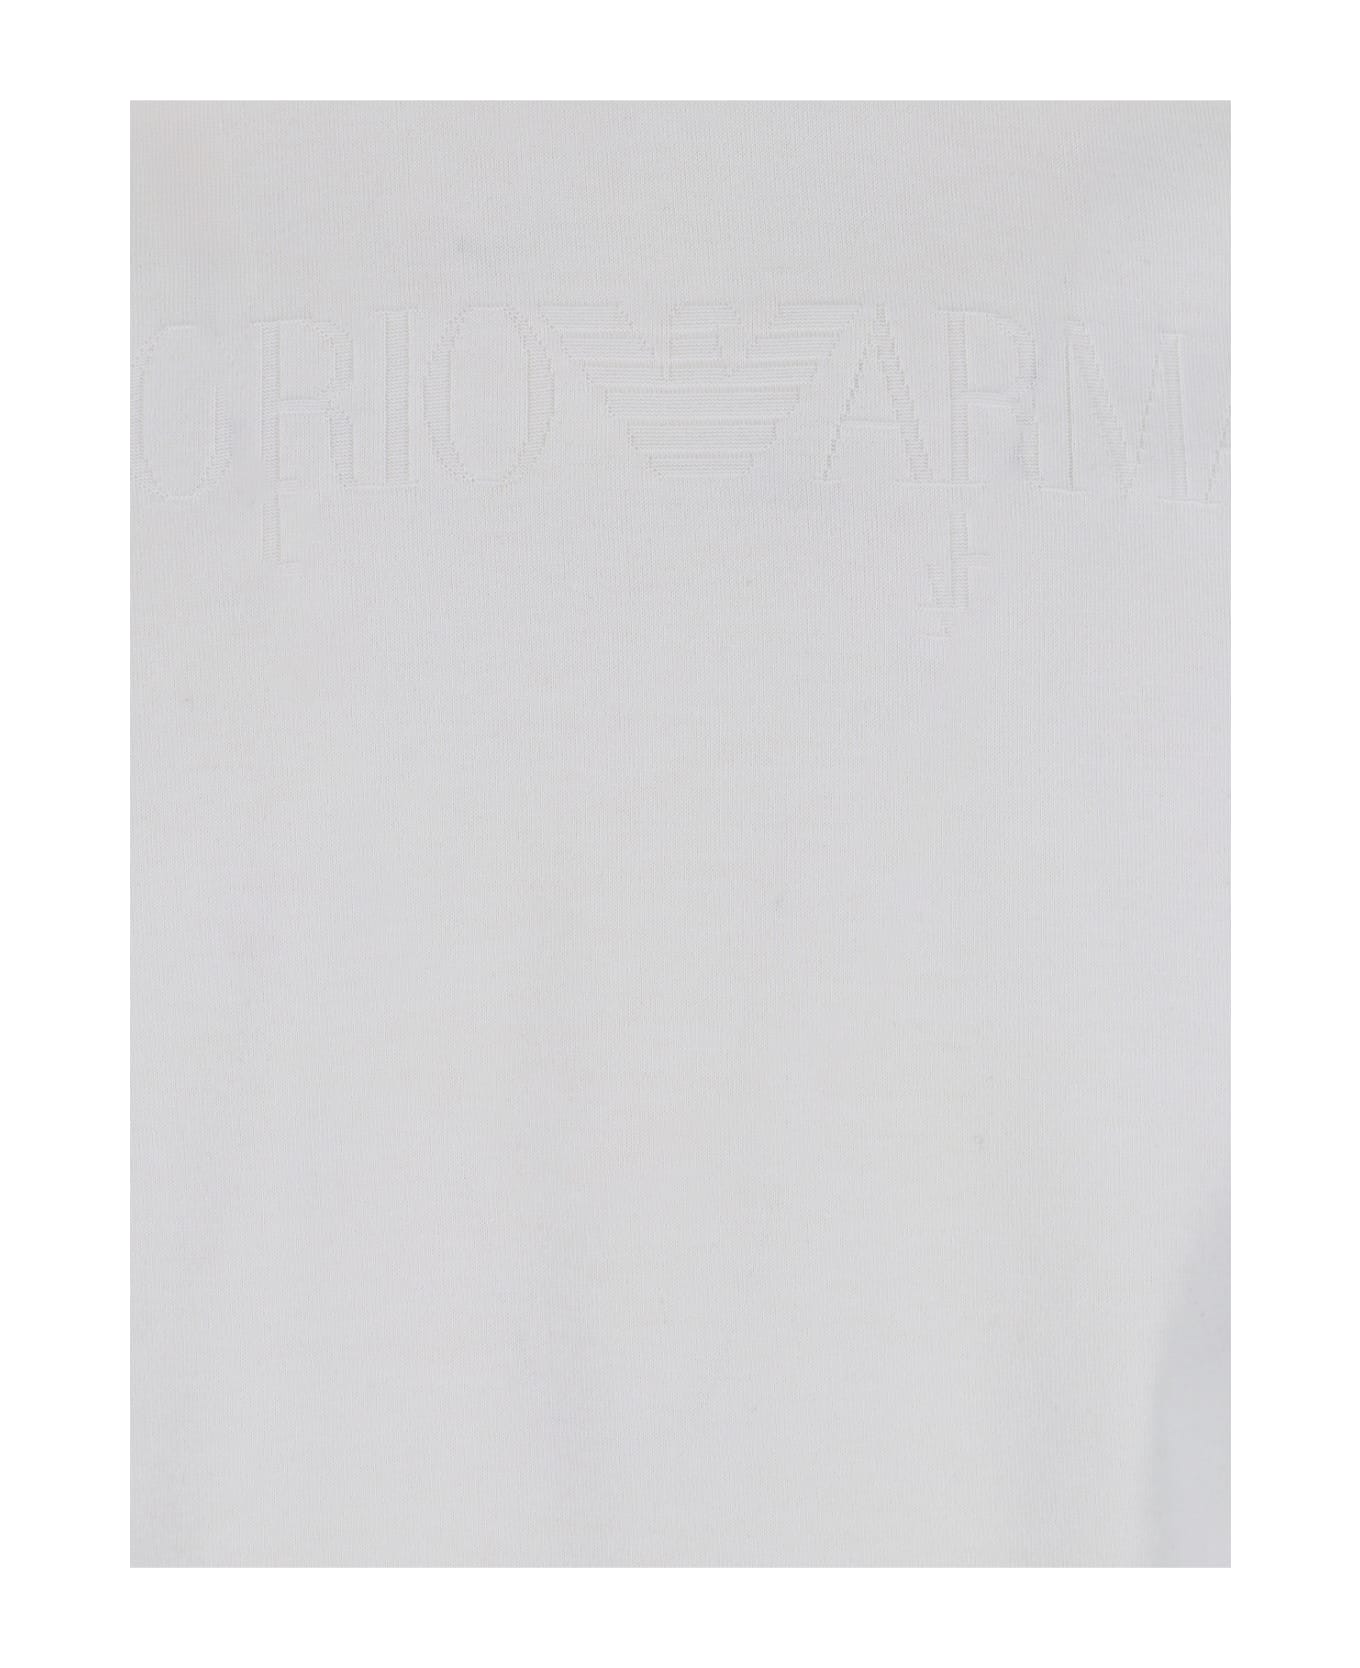 Emporio Armani Logo T-shirt - White シャツ